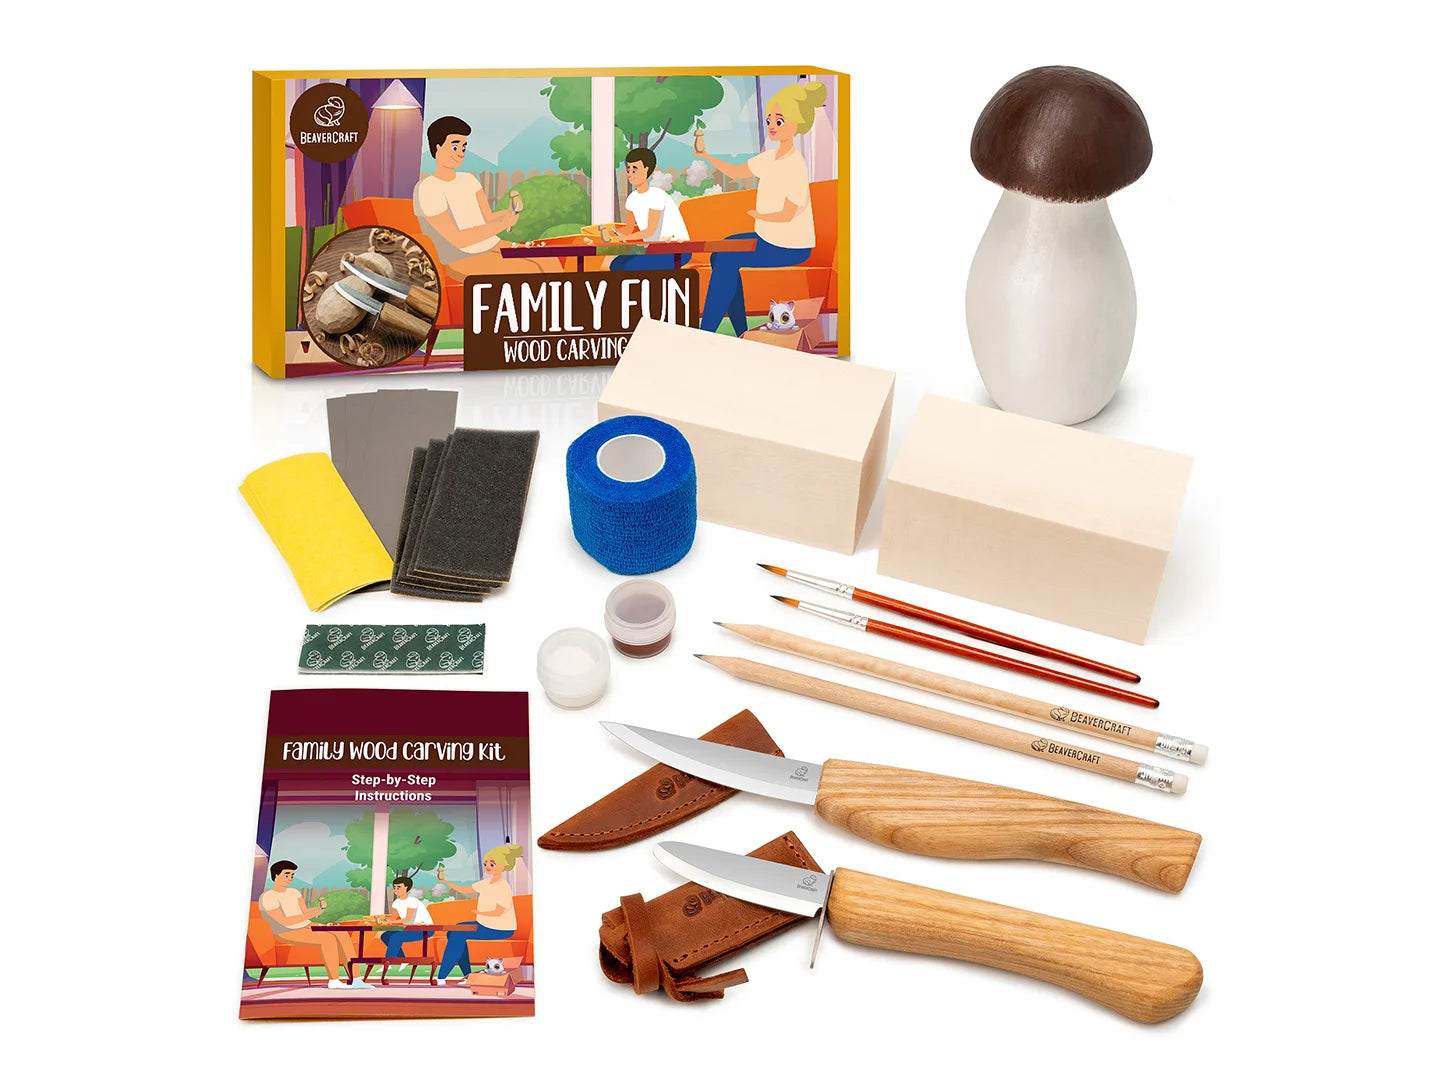 Family Fun Wood Carving Kit